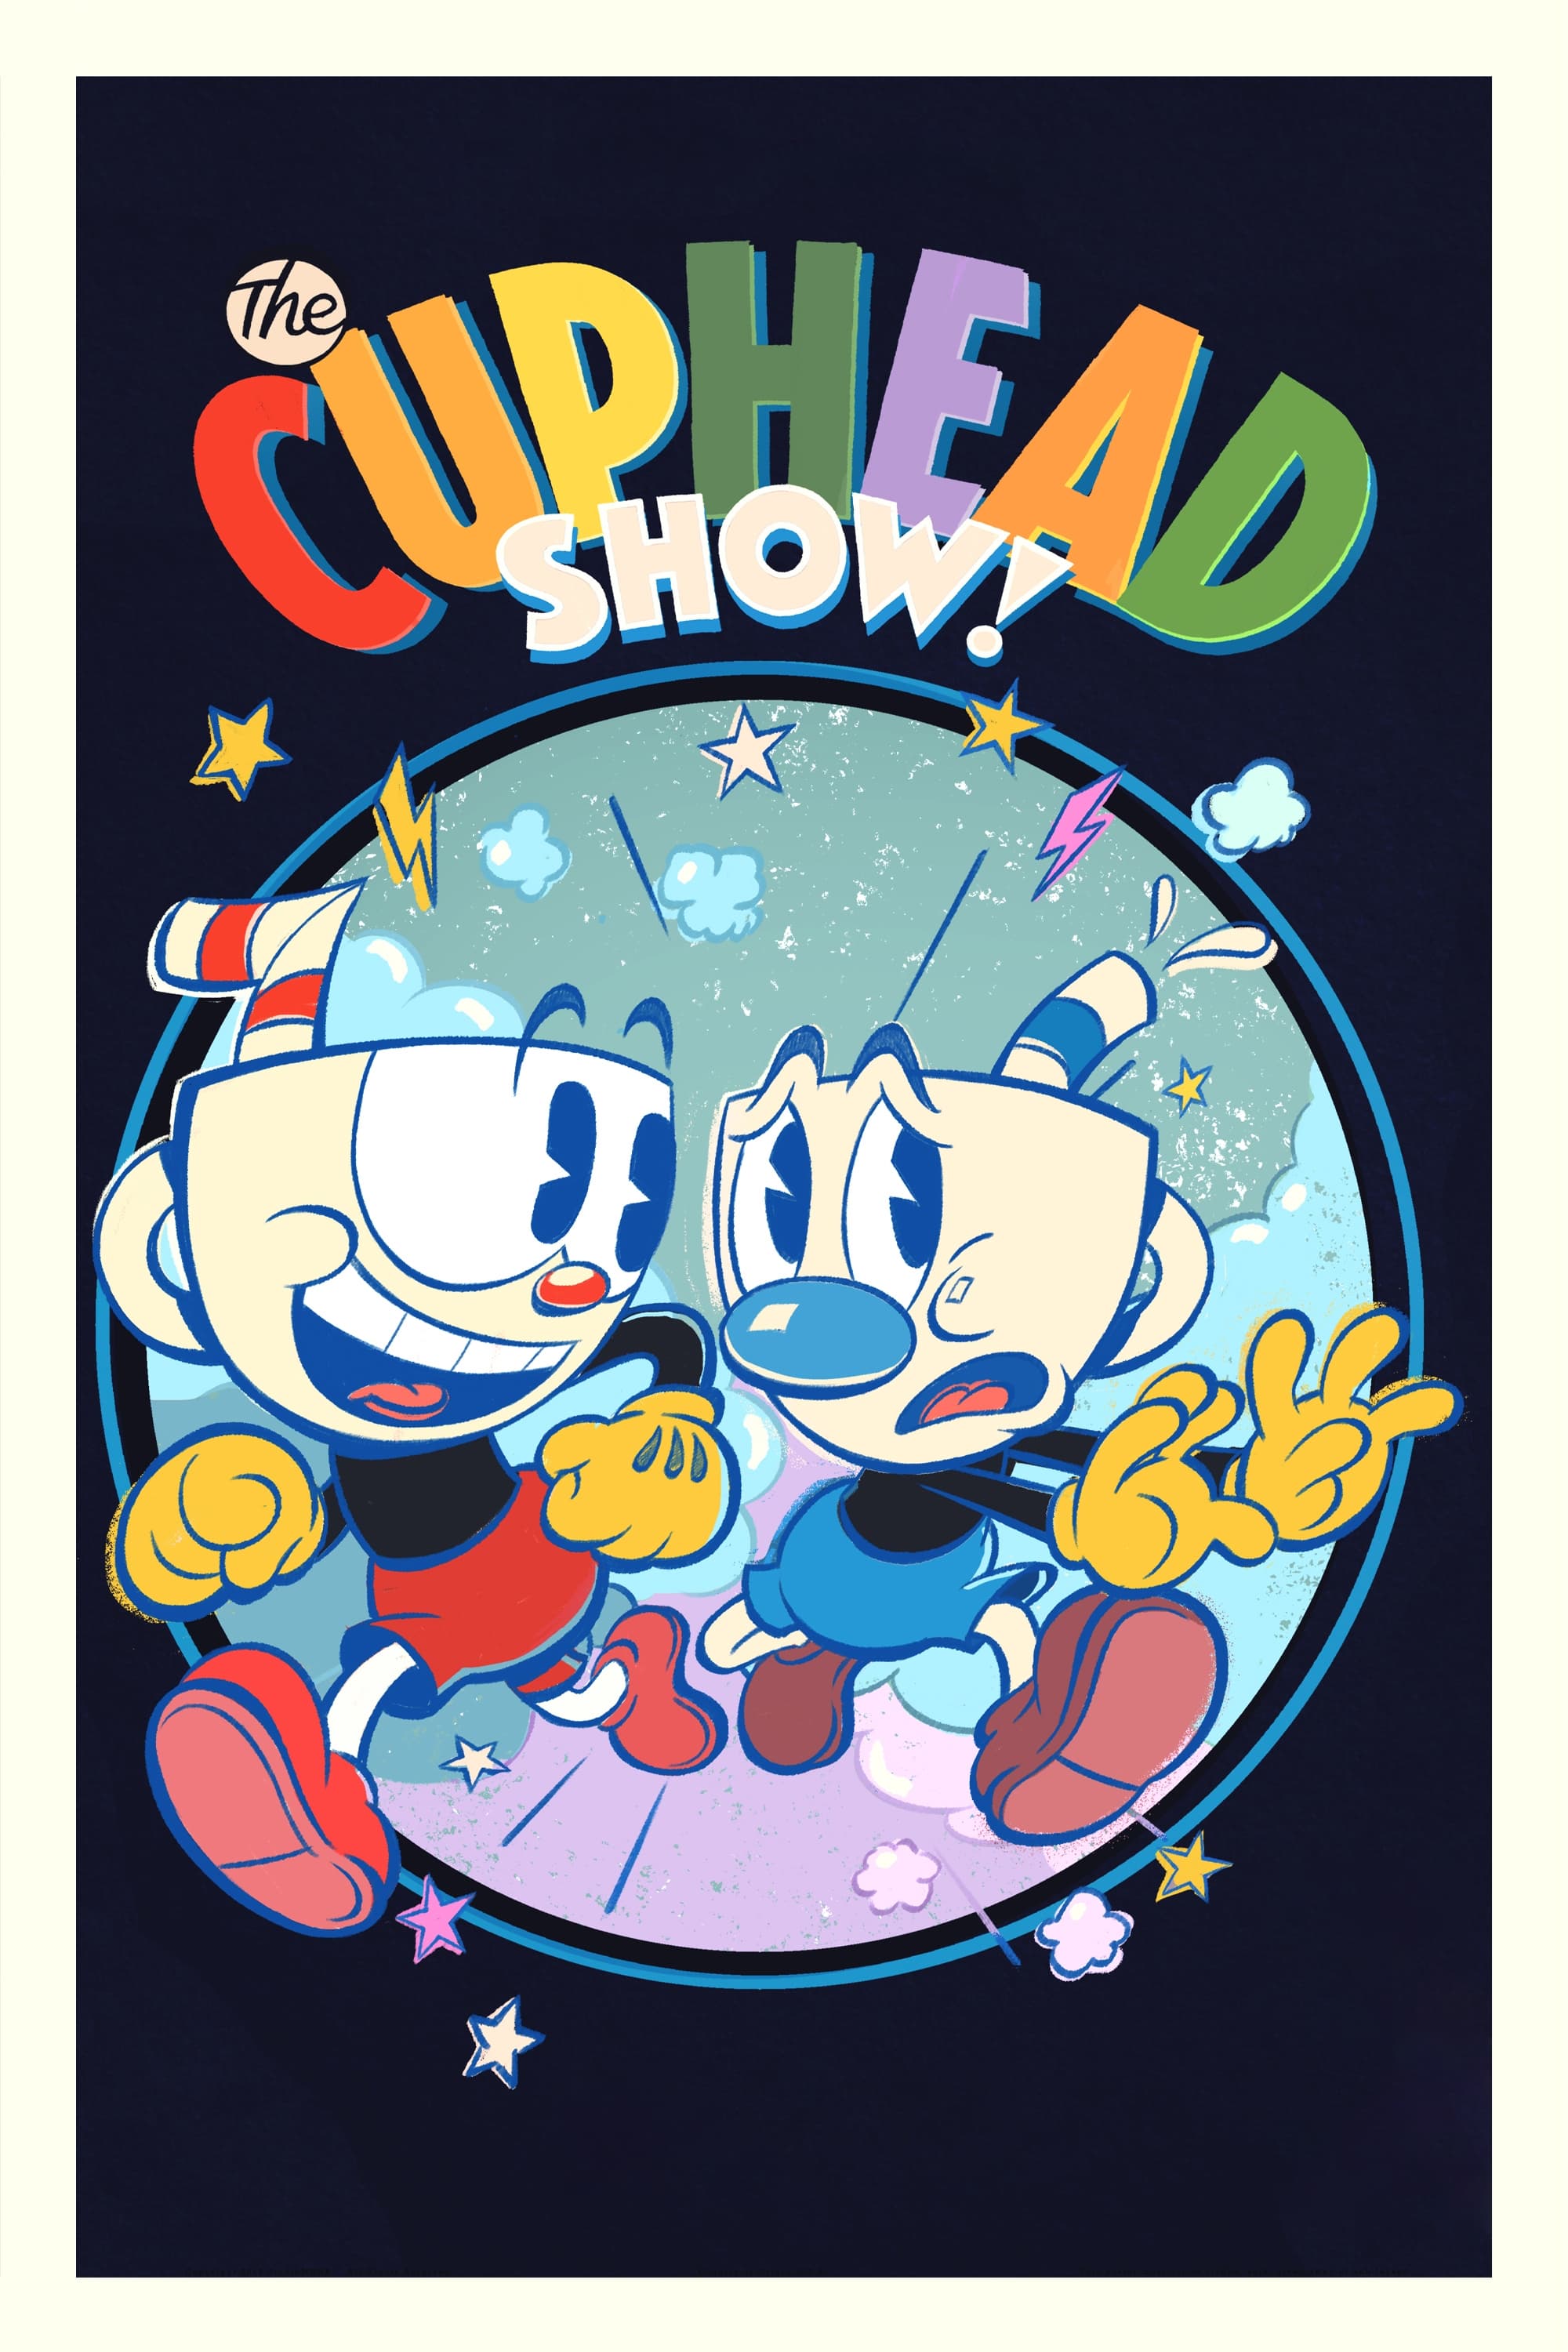 The Cuphead Show! (2022)